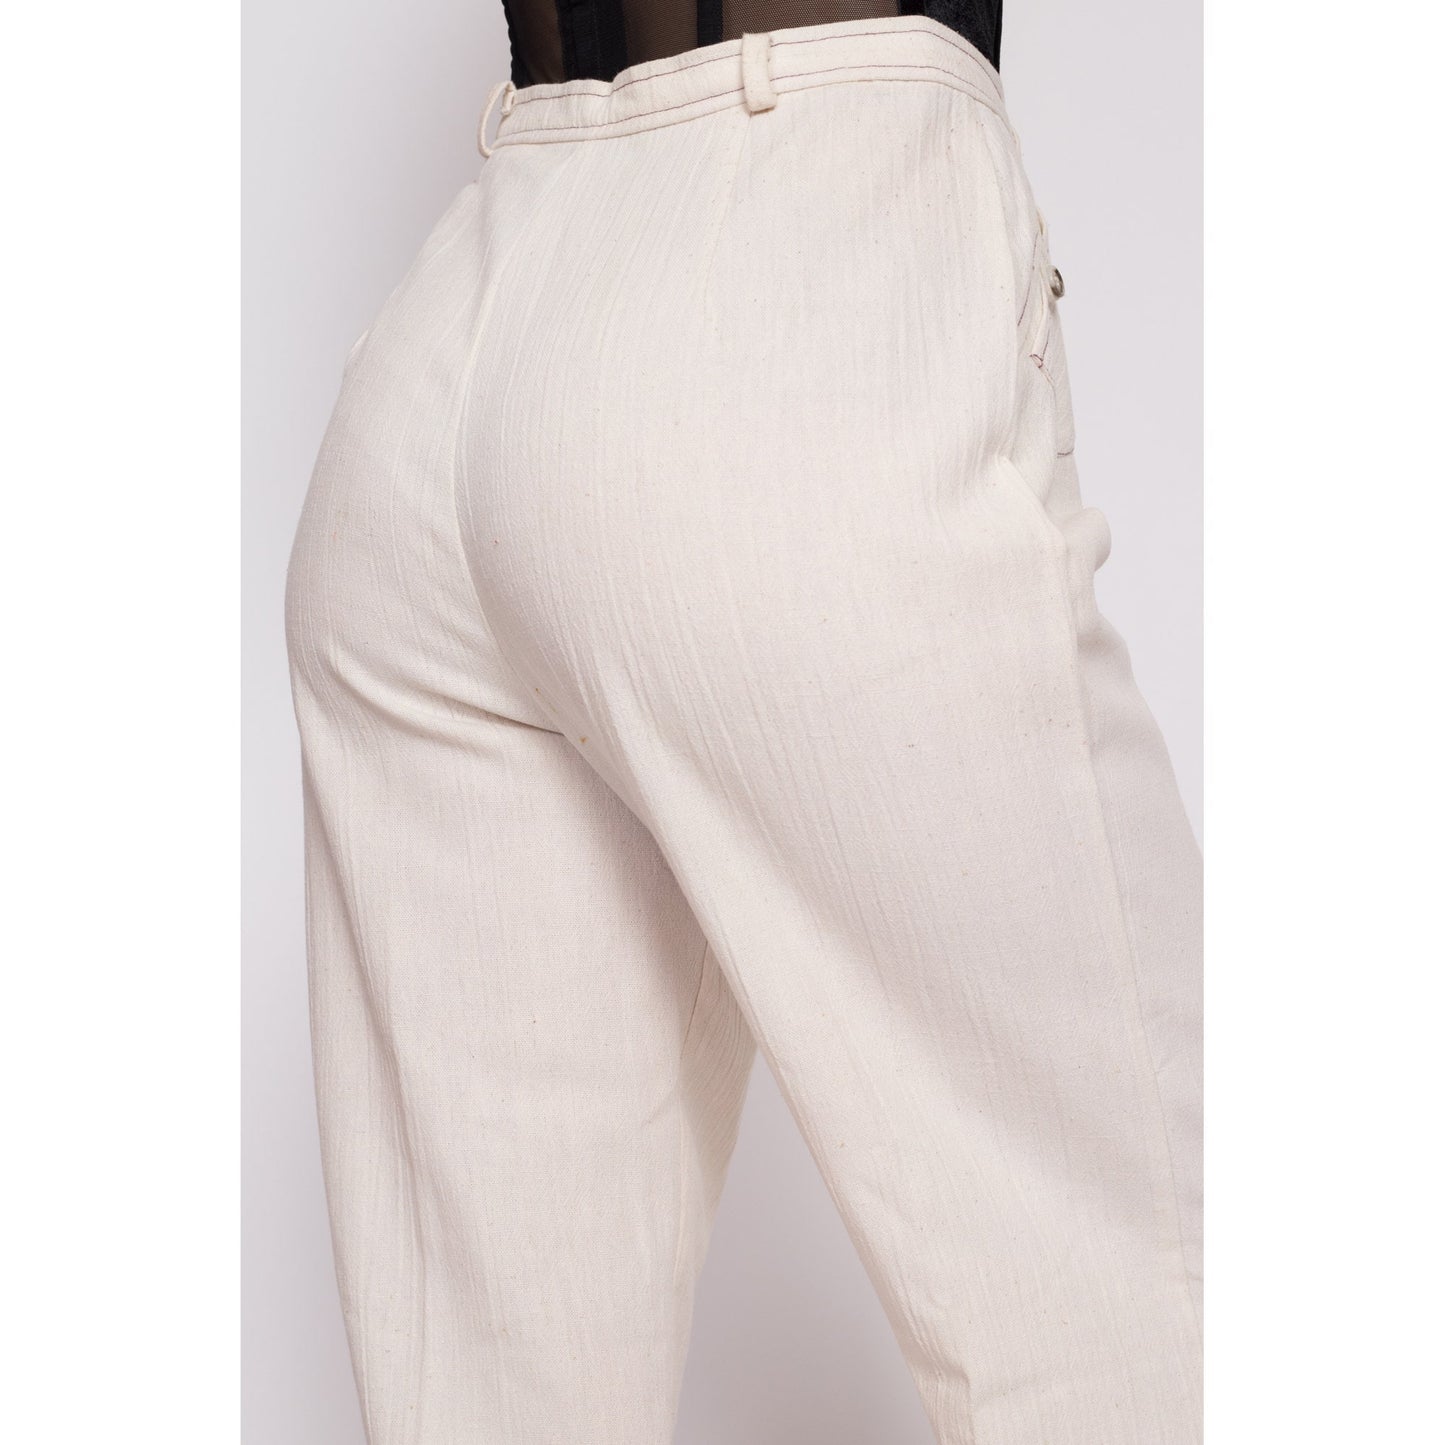 70s Cream High Waisted Contrast Stitch Pants - Medium Tall, 29" Waist | Vintage Woven Cotton Boho Wide Leg Flared Trousers